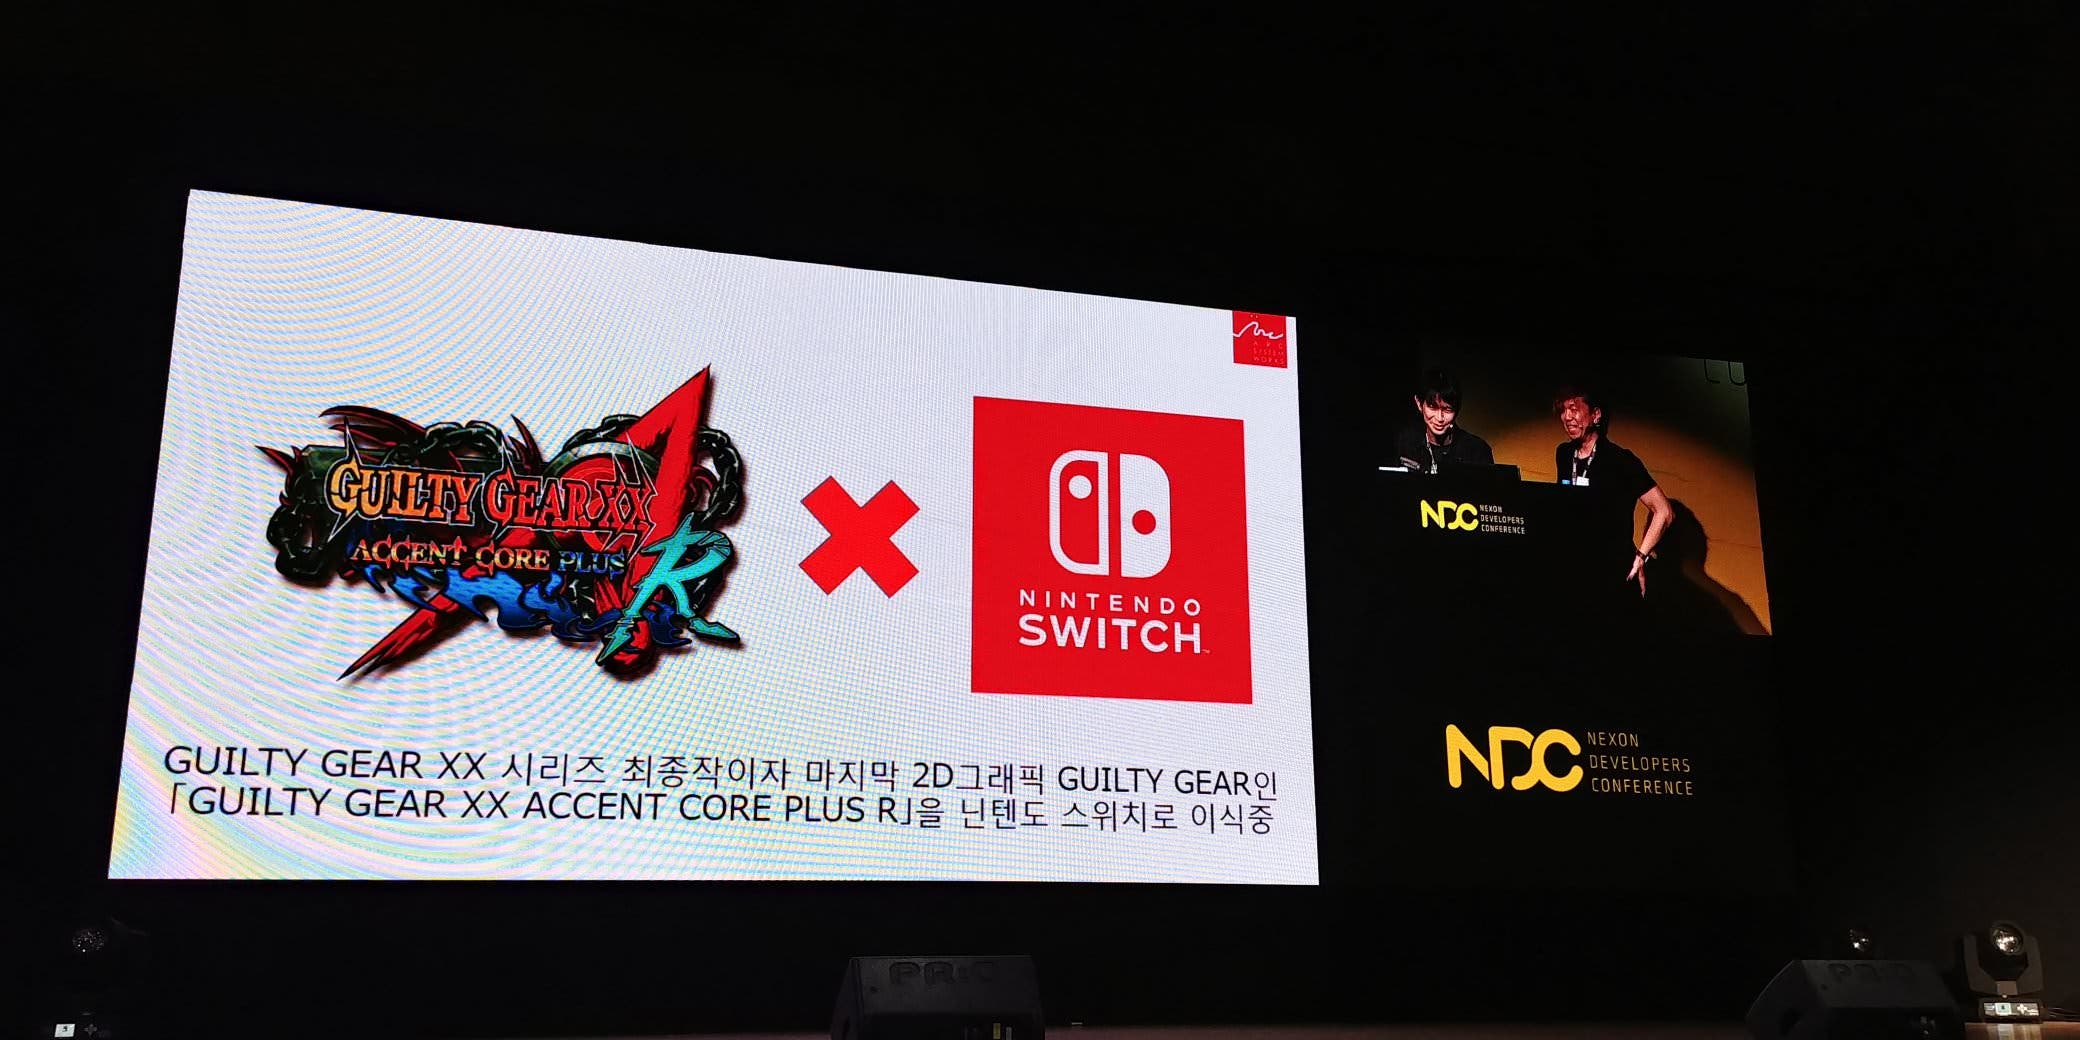 Guilty Gear XX Accent Core Plus R llegará a Nintendo Switch